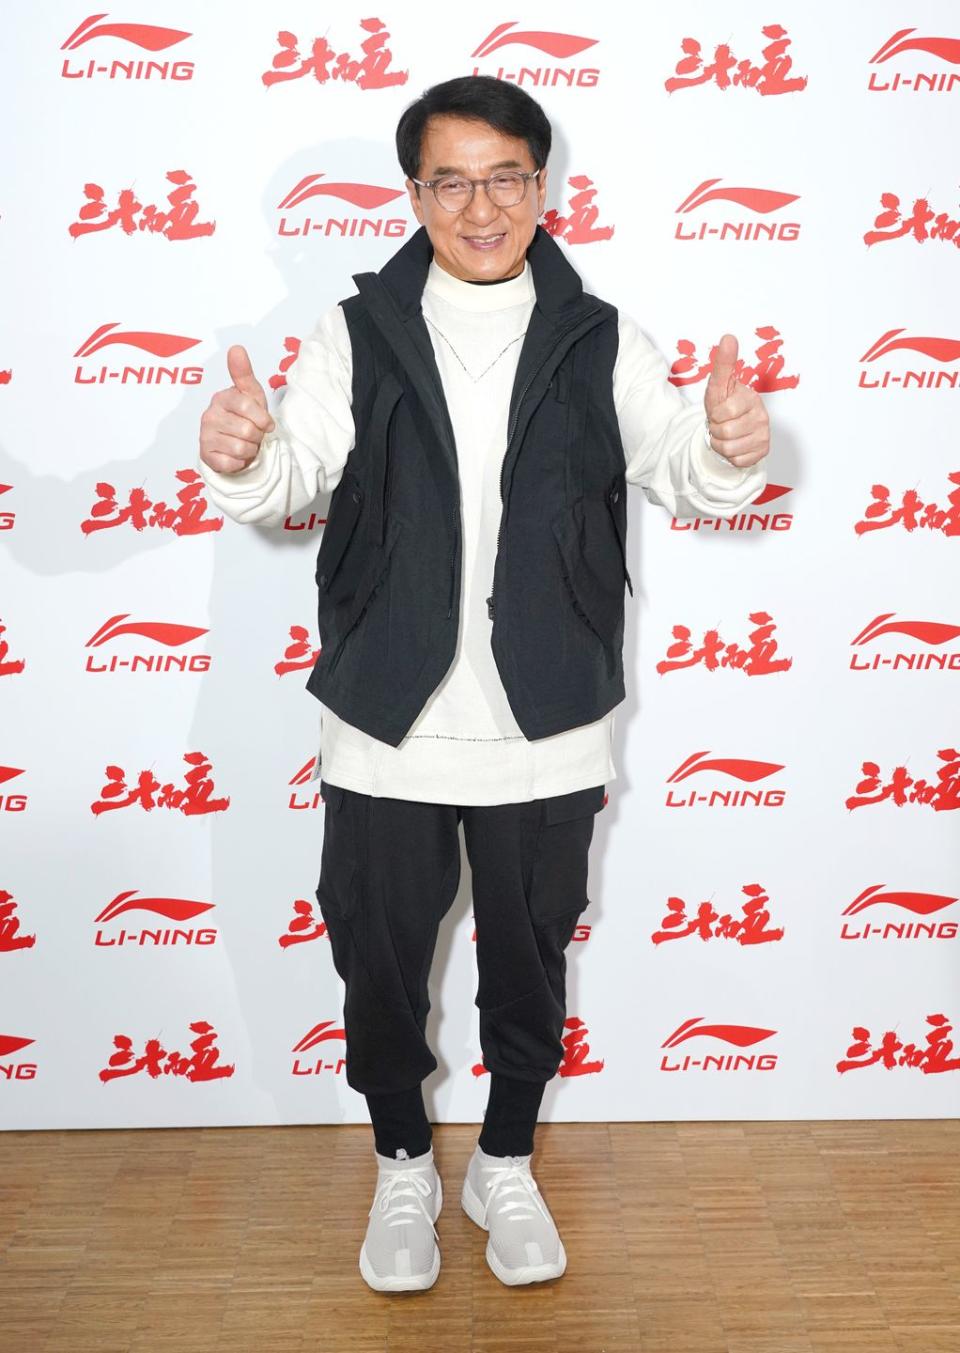 4) Jackie Chan